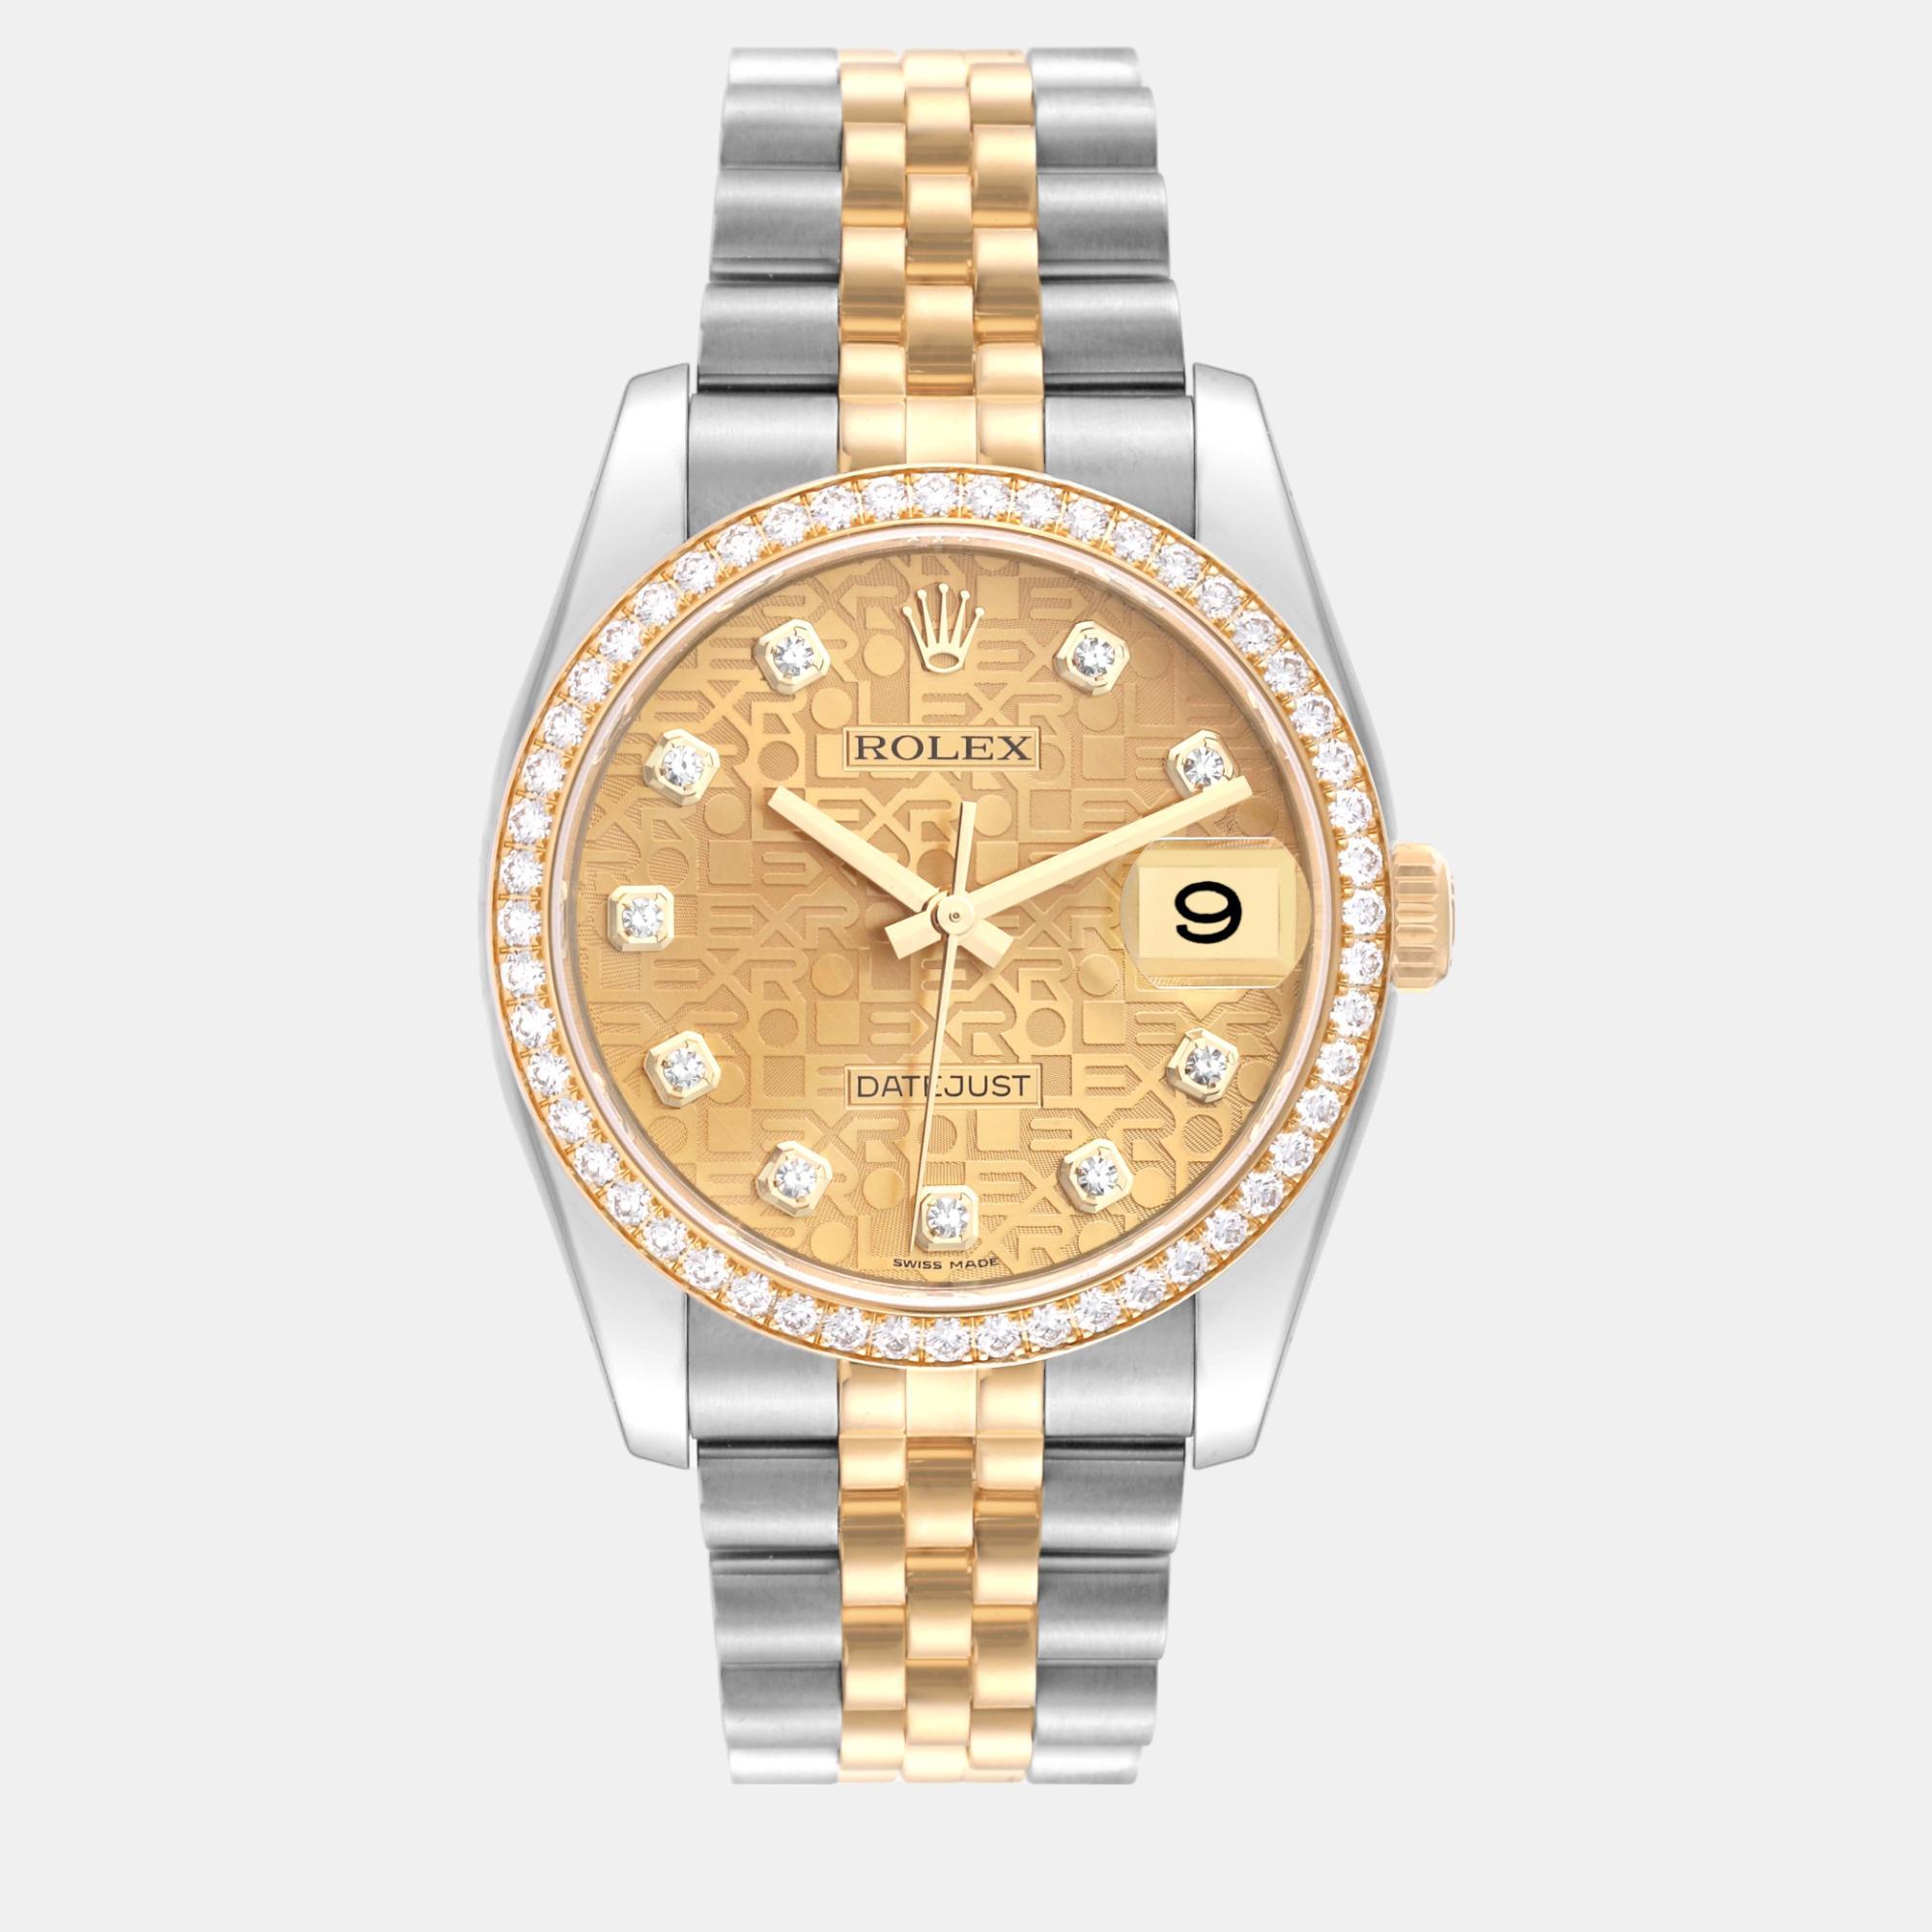 Rolex datejust champagne dial steel yellow gold diamond men's watch  36.0 mm